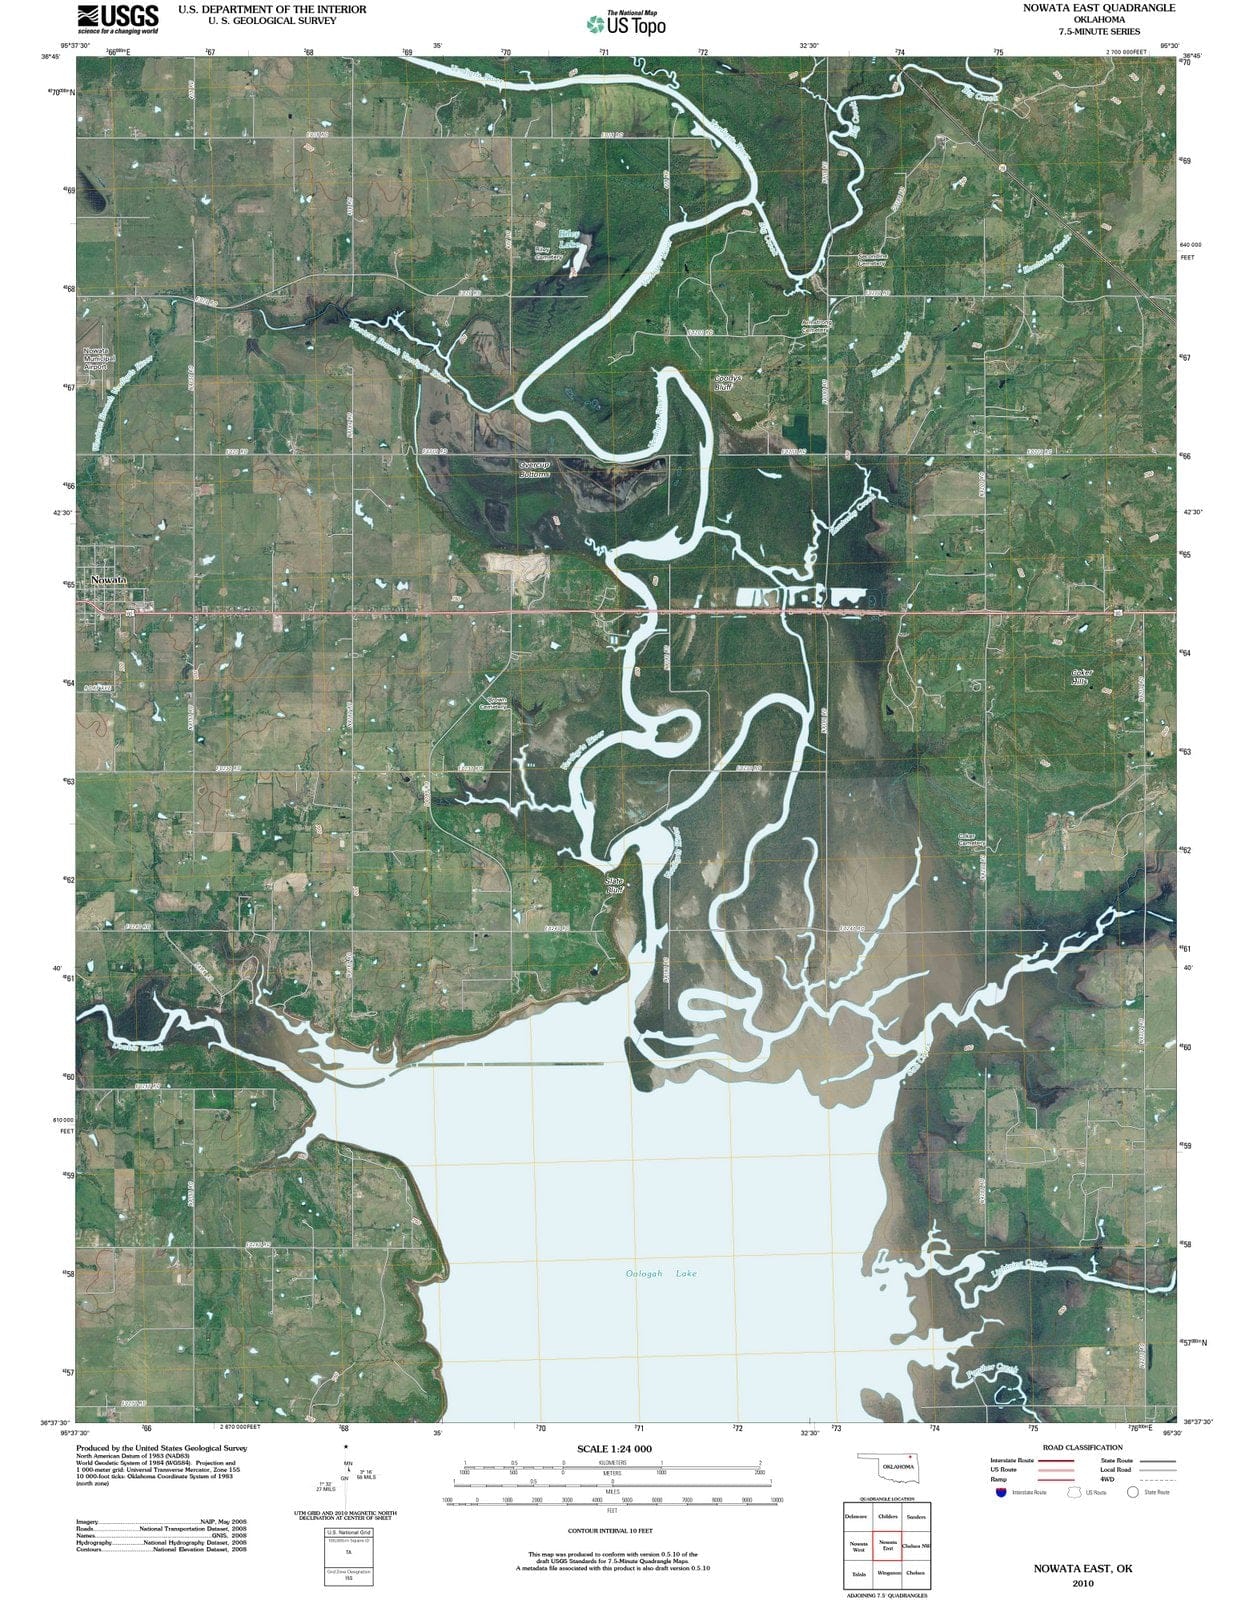 2010 Nowata East, OK - Oklahoma - USGS Topographic Map